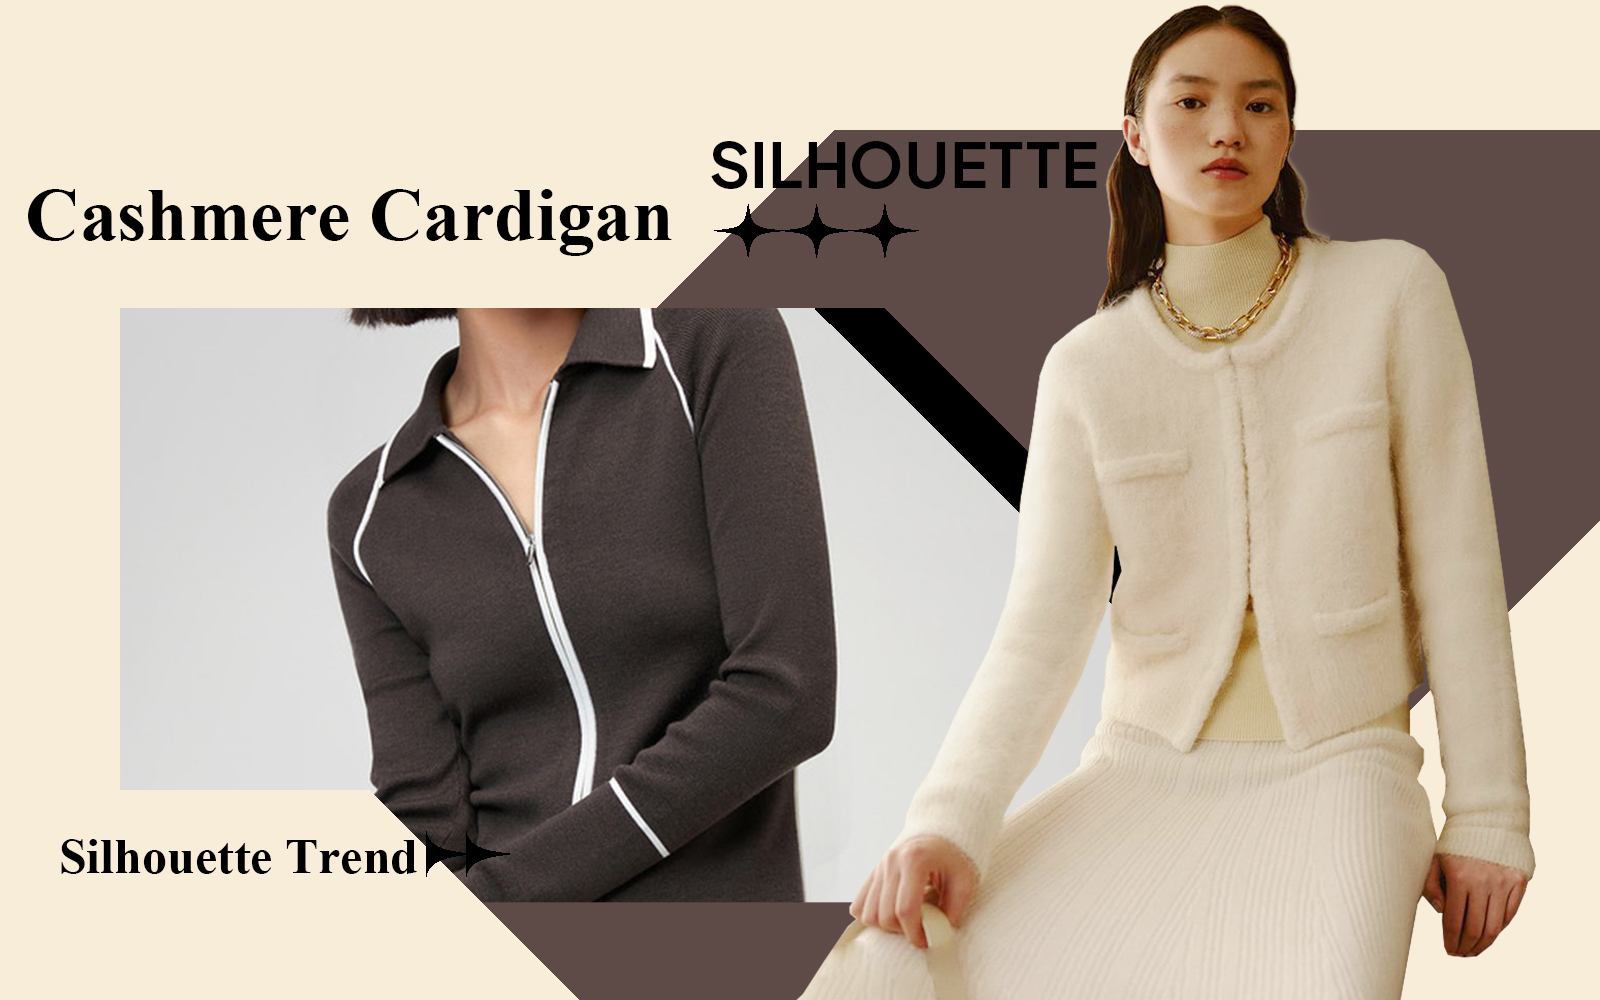 Cashmere Cardigan -- A/W 24/25 Silhouette Trend for Women's Knitwear